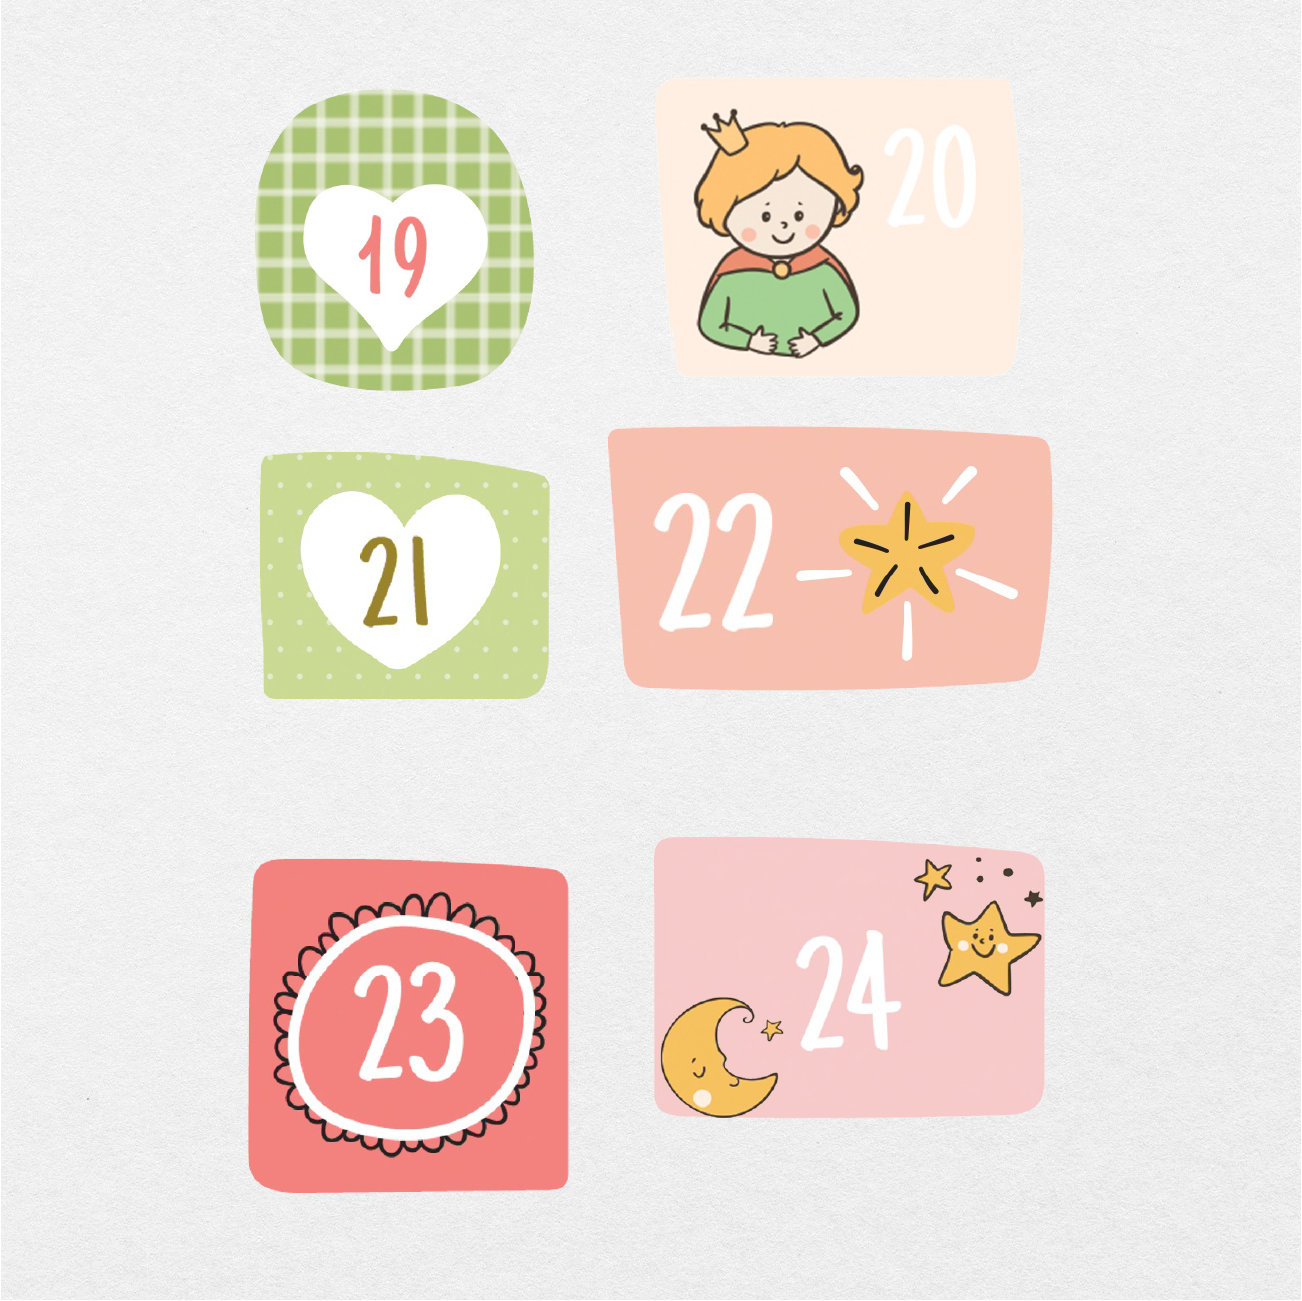 38 Digital Little Prince Calendar Sticker Bundle - Stationery Pal